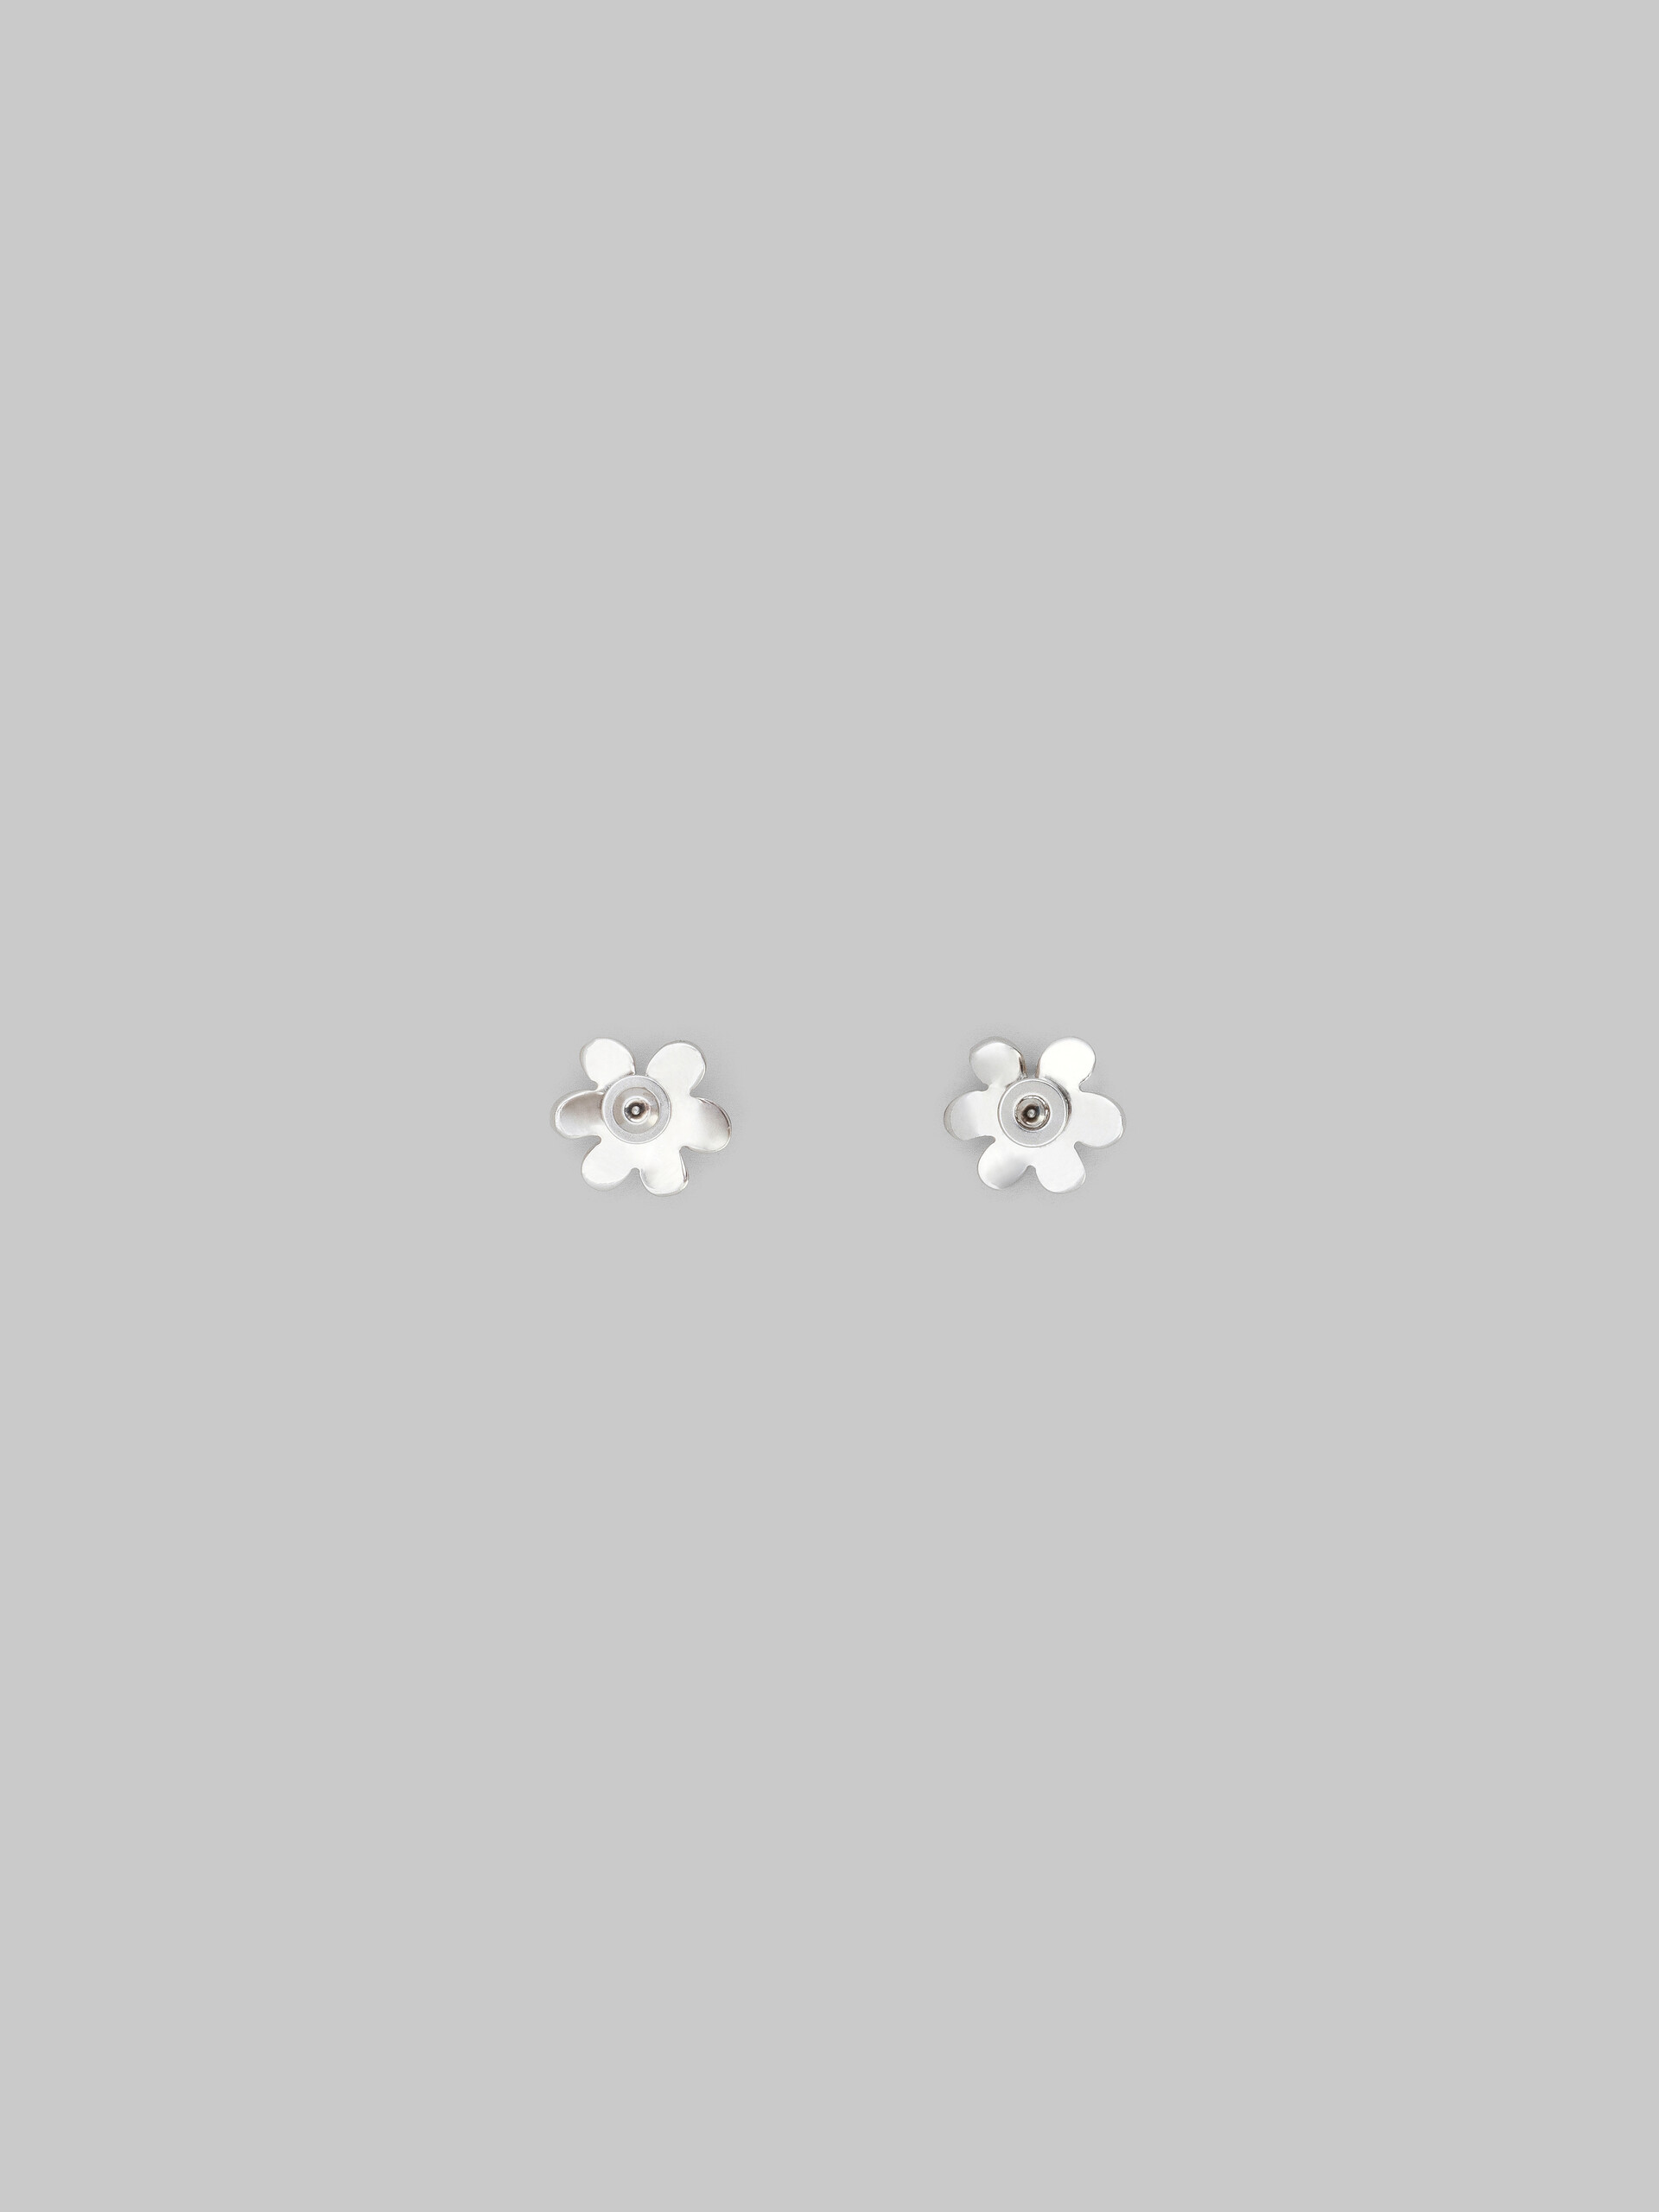 Daisy stud earrings with pavé rhinestones - Earrings - Image 3